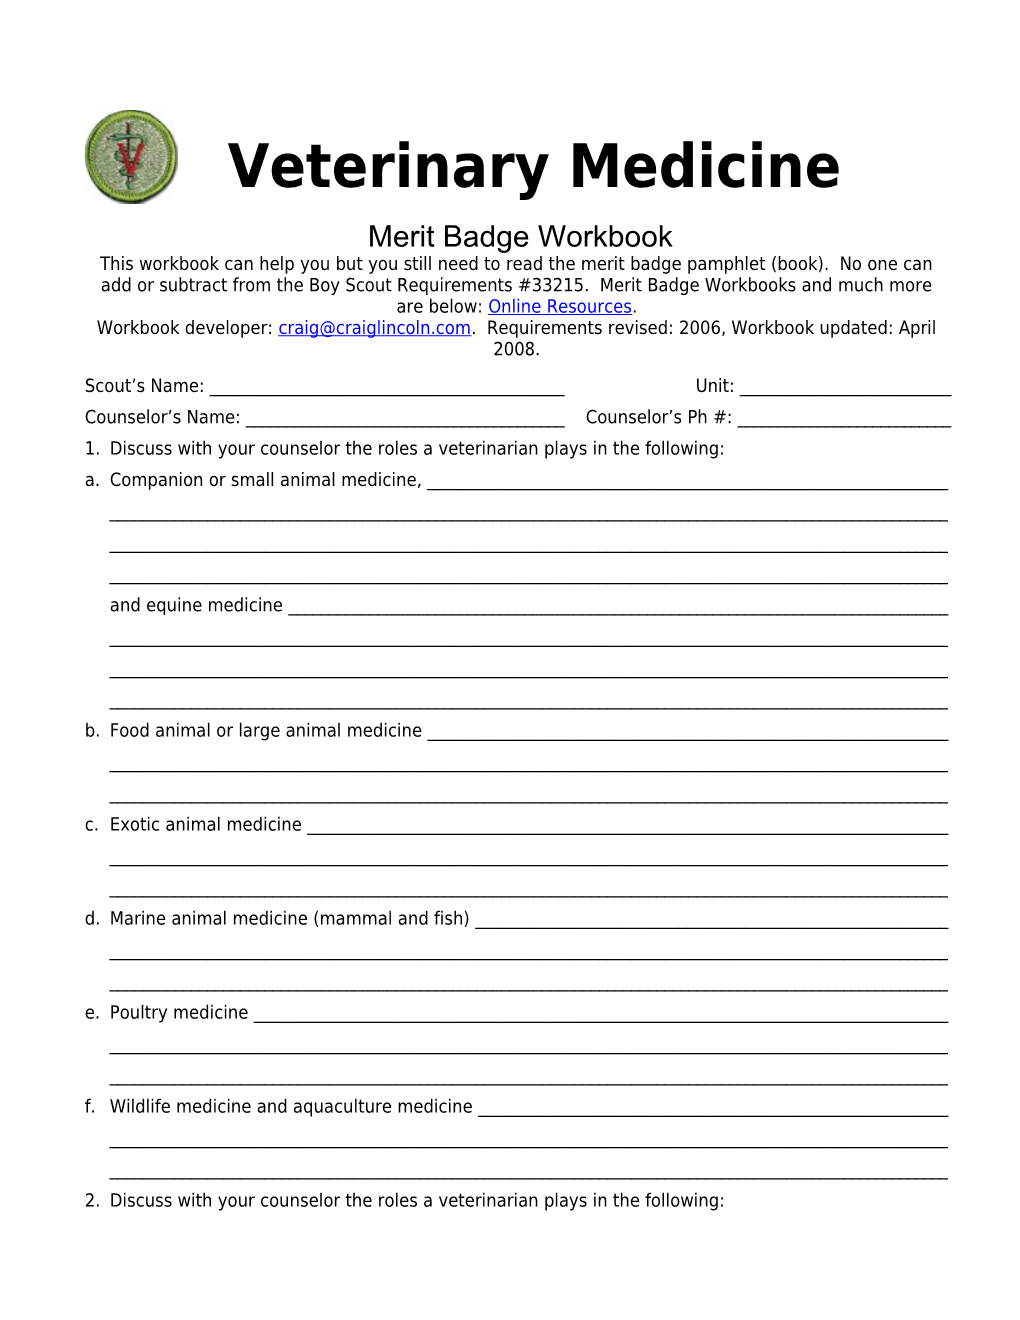 Veterinary Medicine P. 3 Merit Badge Workbook Scout's Name: ______